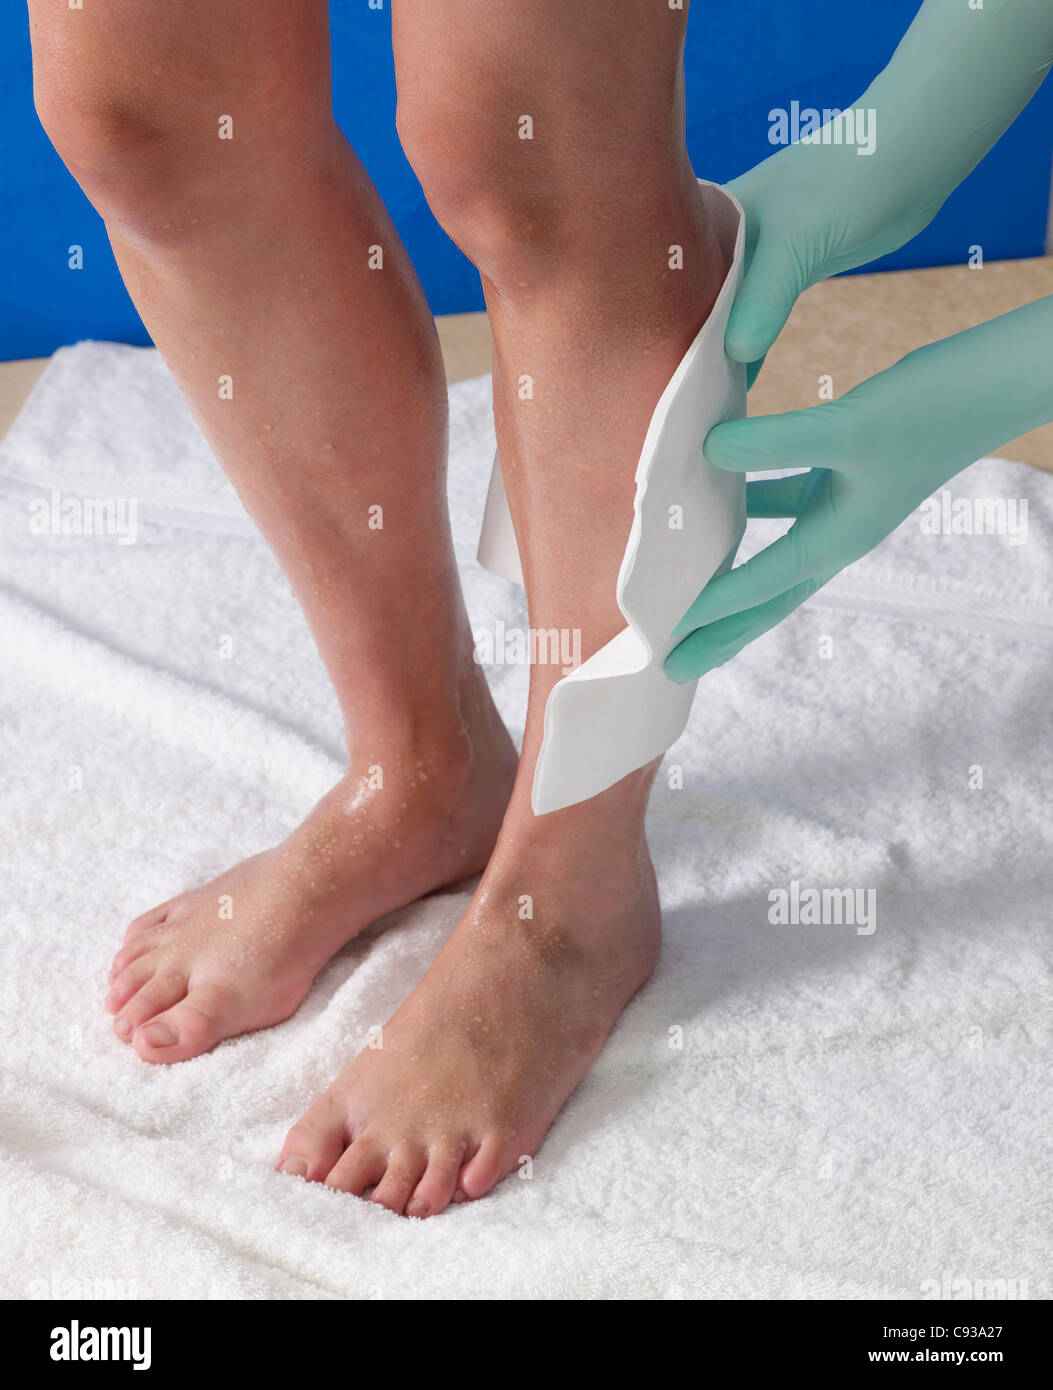 medical waterproof dressing on leg Stock Photo